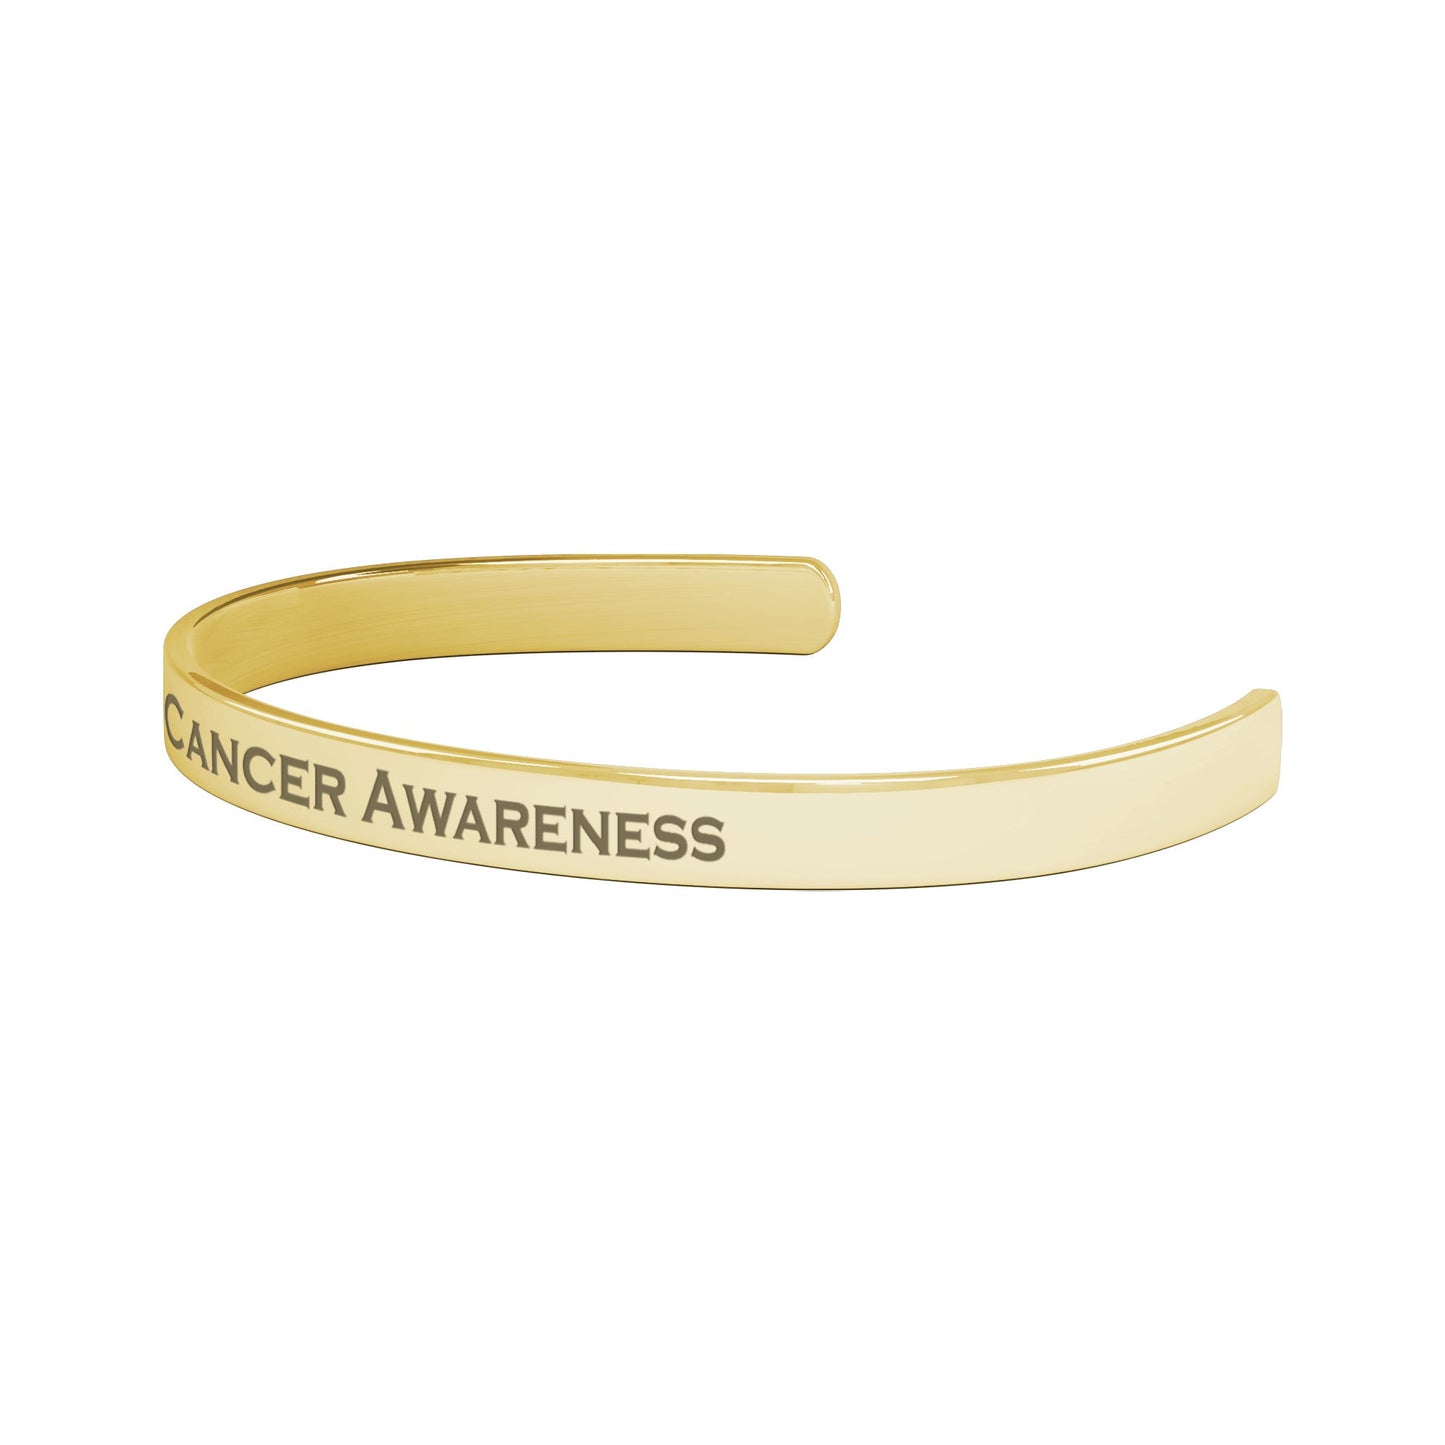 Personalized Brain Cancer Awareness Cuff Bracelet |x|